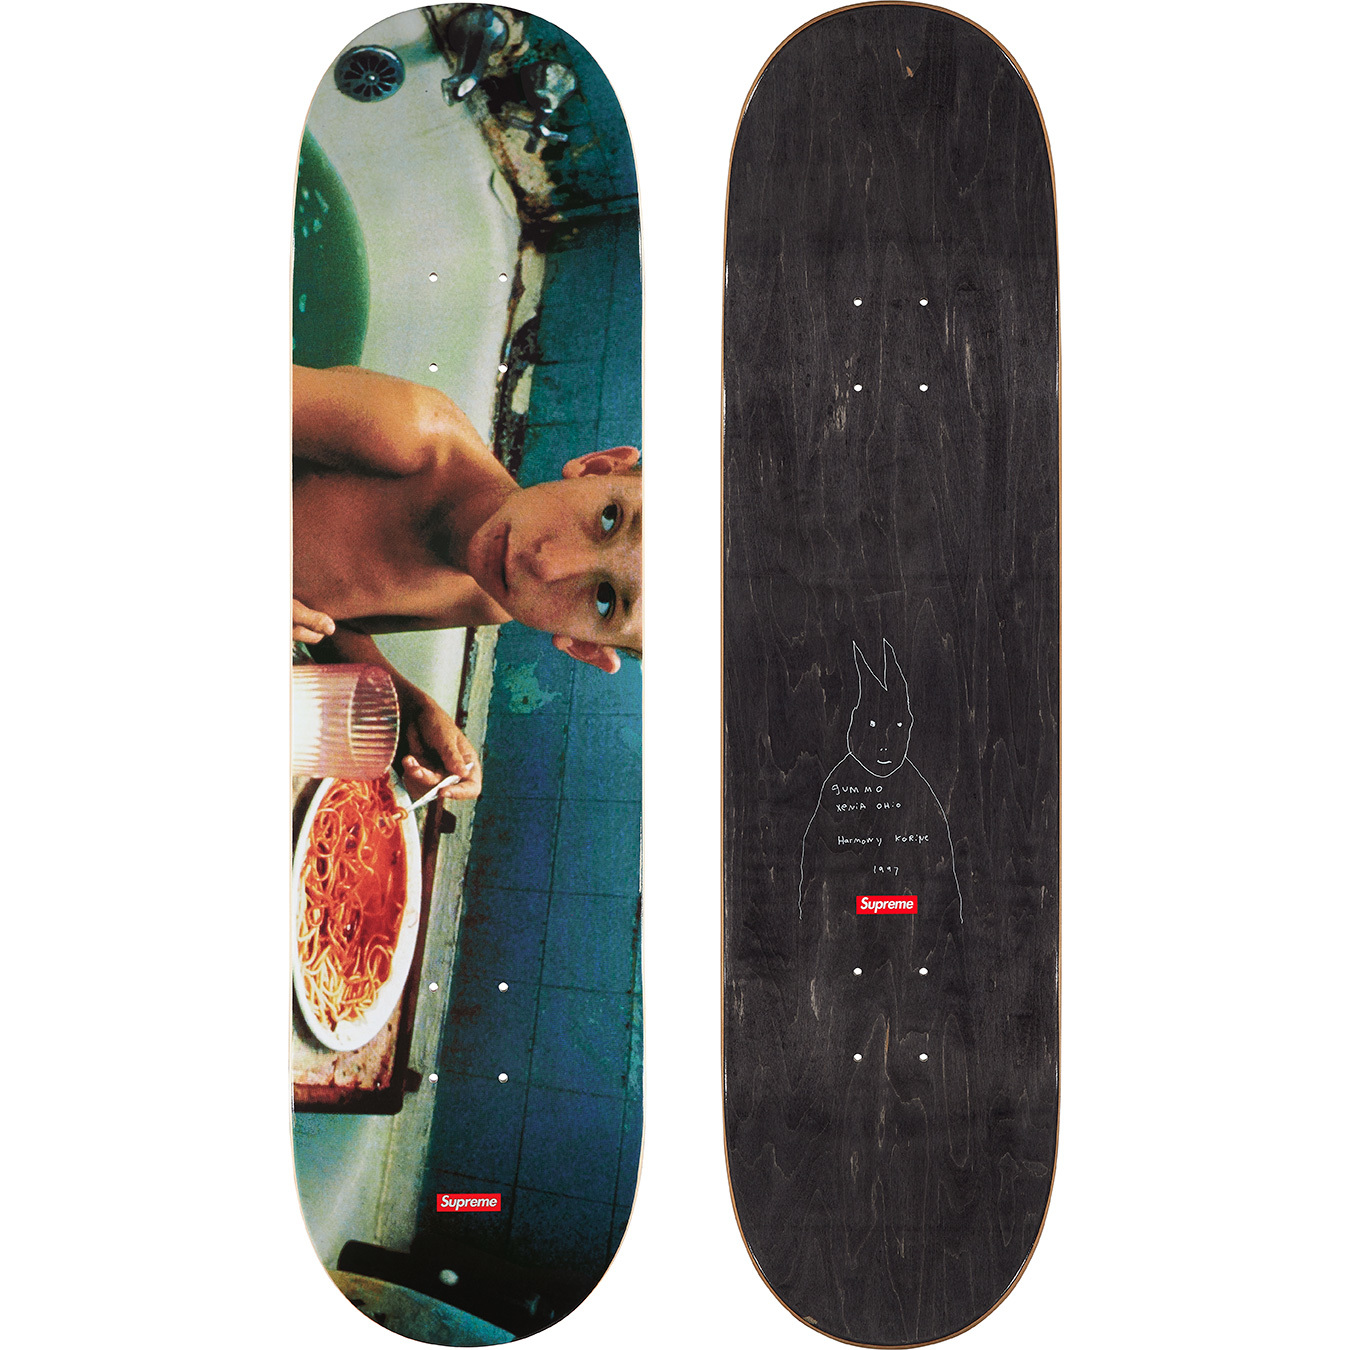 Supreme Supreme/Gummo Skateboard